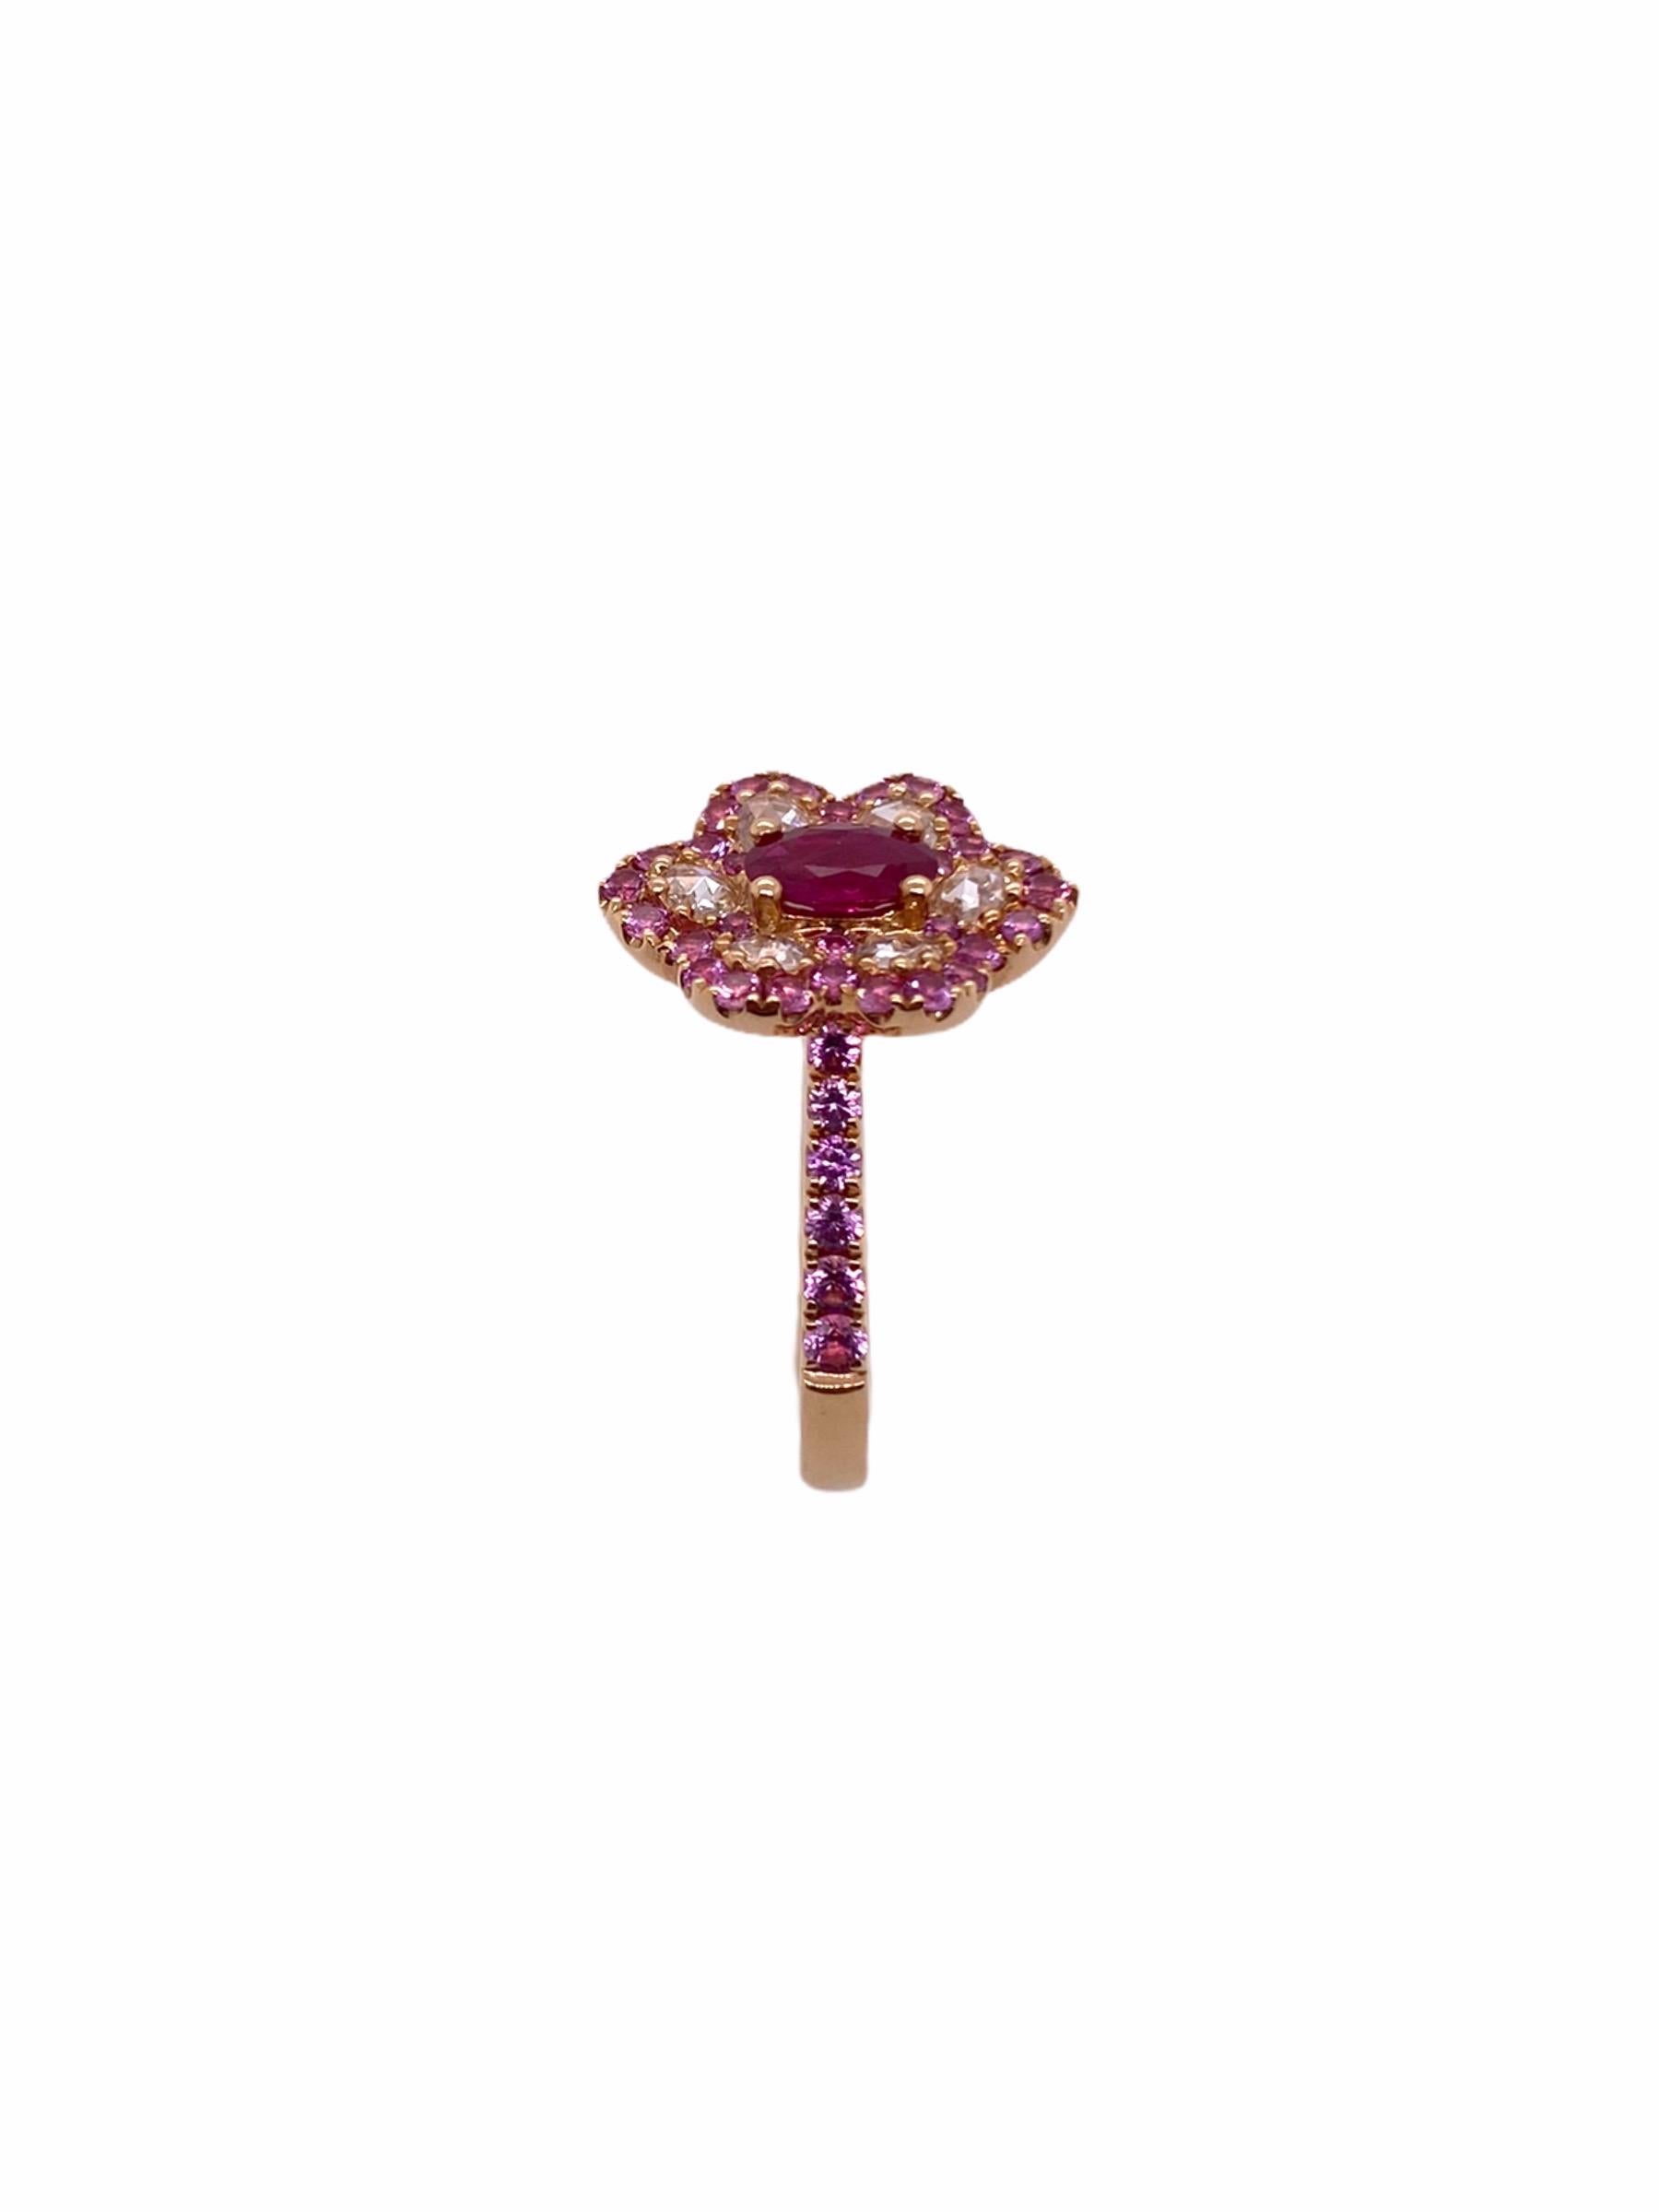 Modern Paris Craft House Ruby Diamond Floral Ring in 18 Karat Rose Gold For Sale